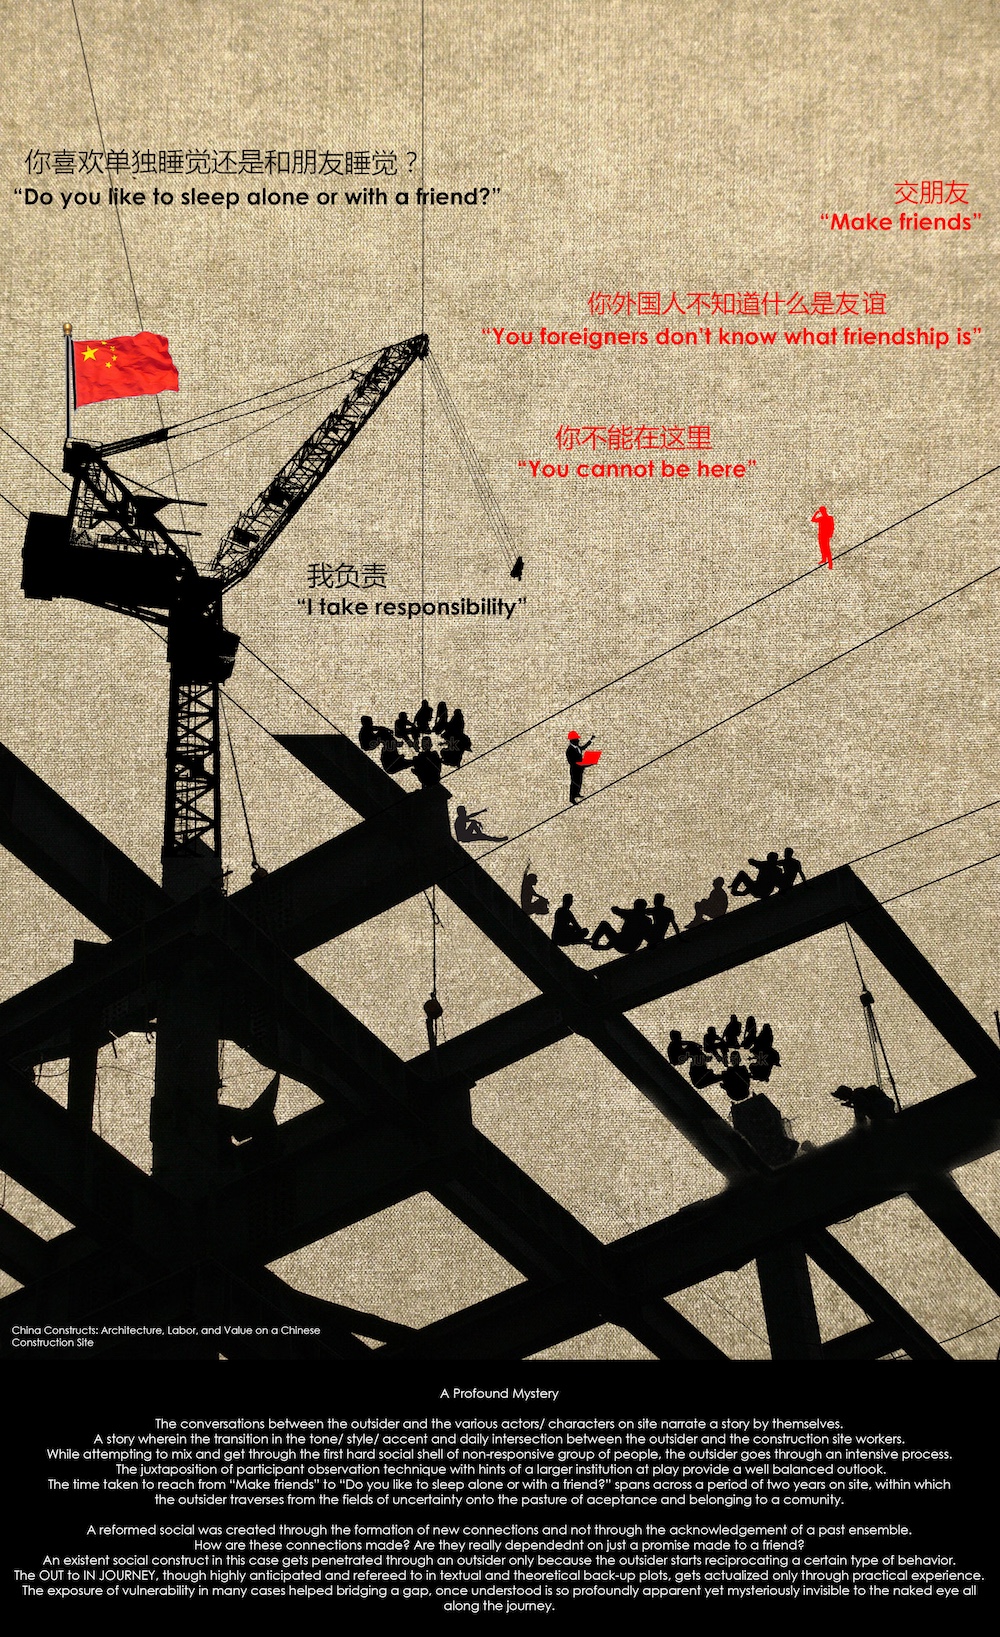 William Thomson: "China Constructs"